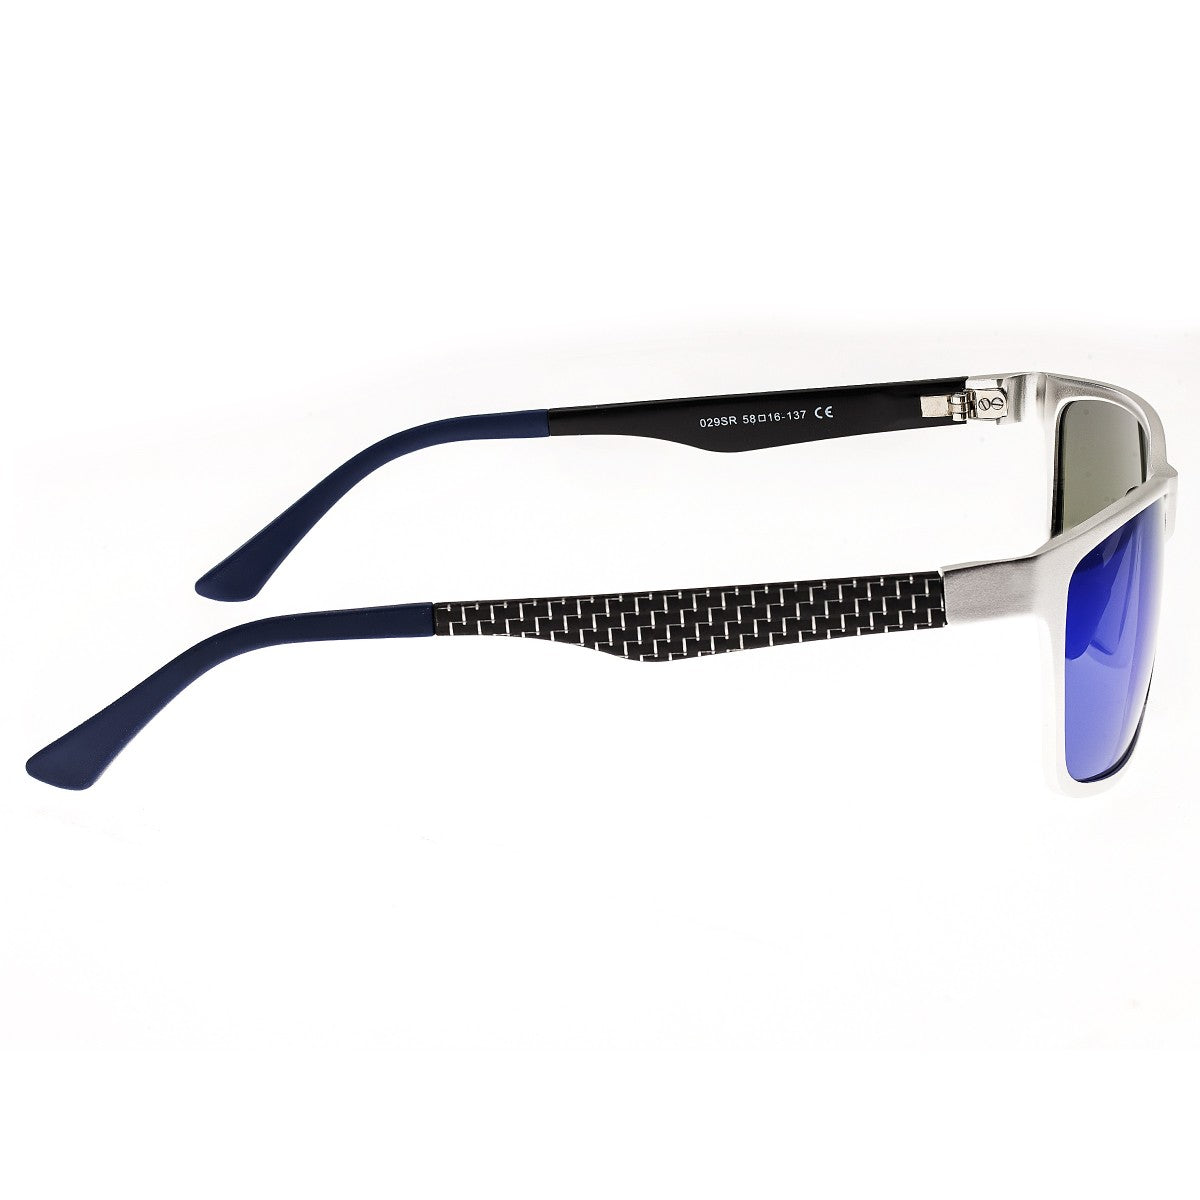 Breed Vulpecula Titanium Polarized Sunglasses - Silver/Purple-Blue - BSG029SR